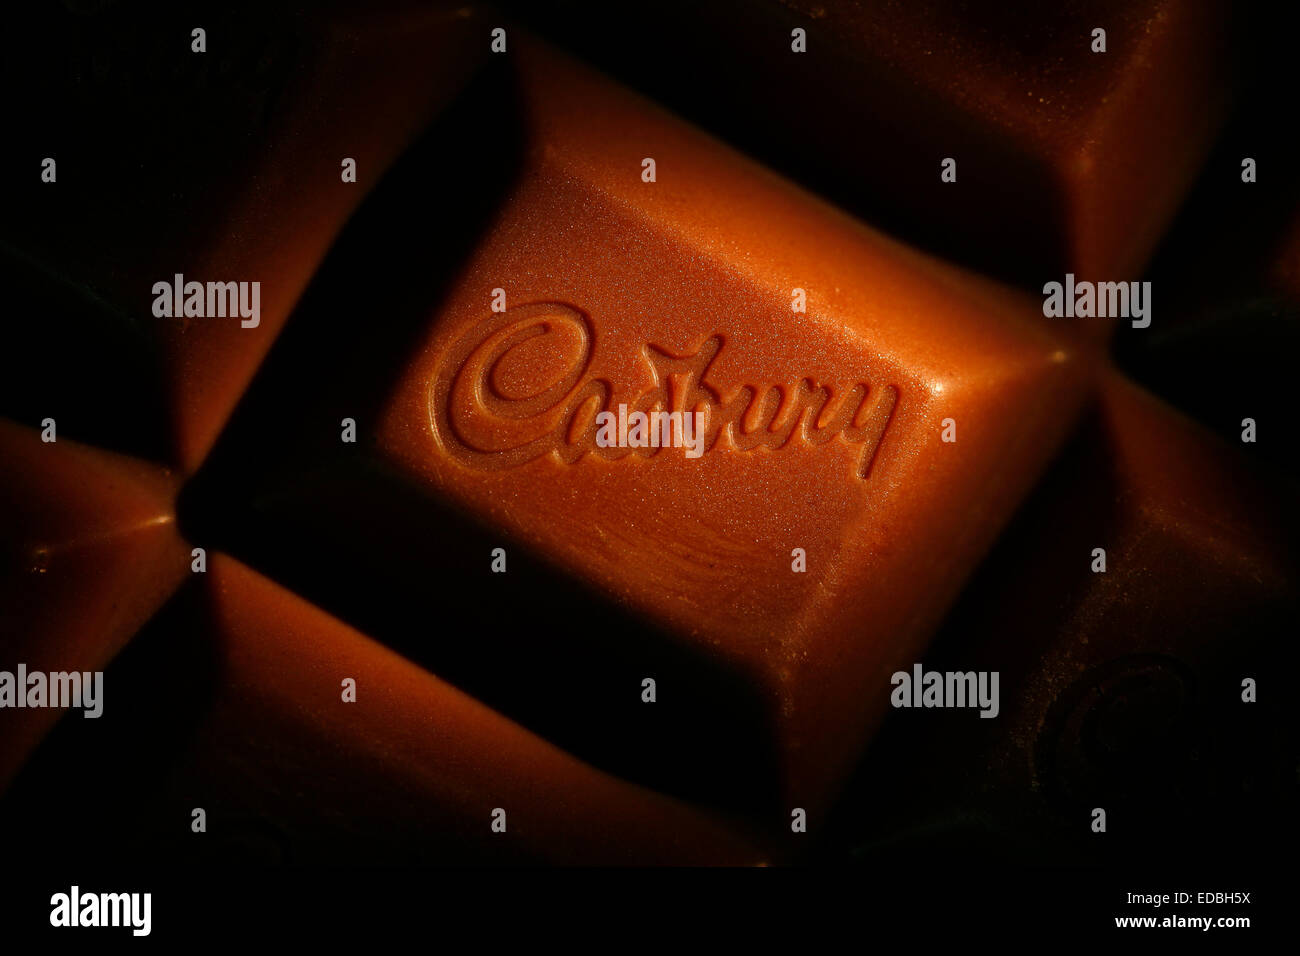 Illustrative image of Cadbury's Dairy Milk chocolate Stock Photo